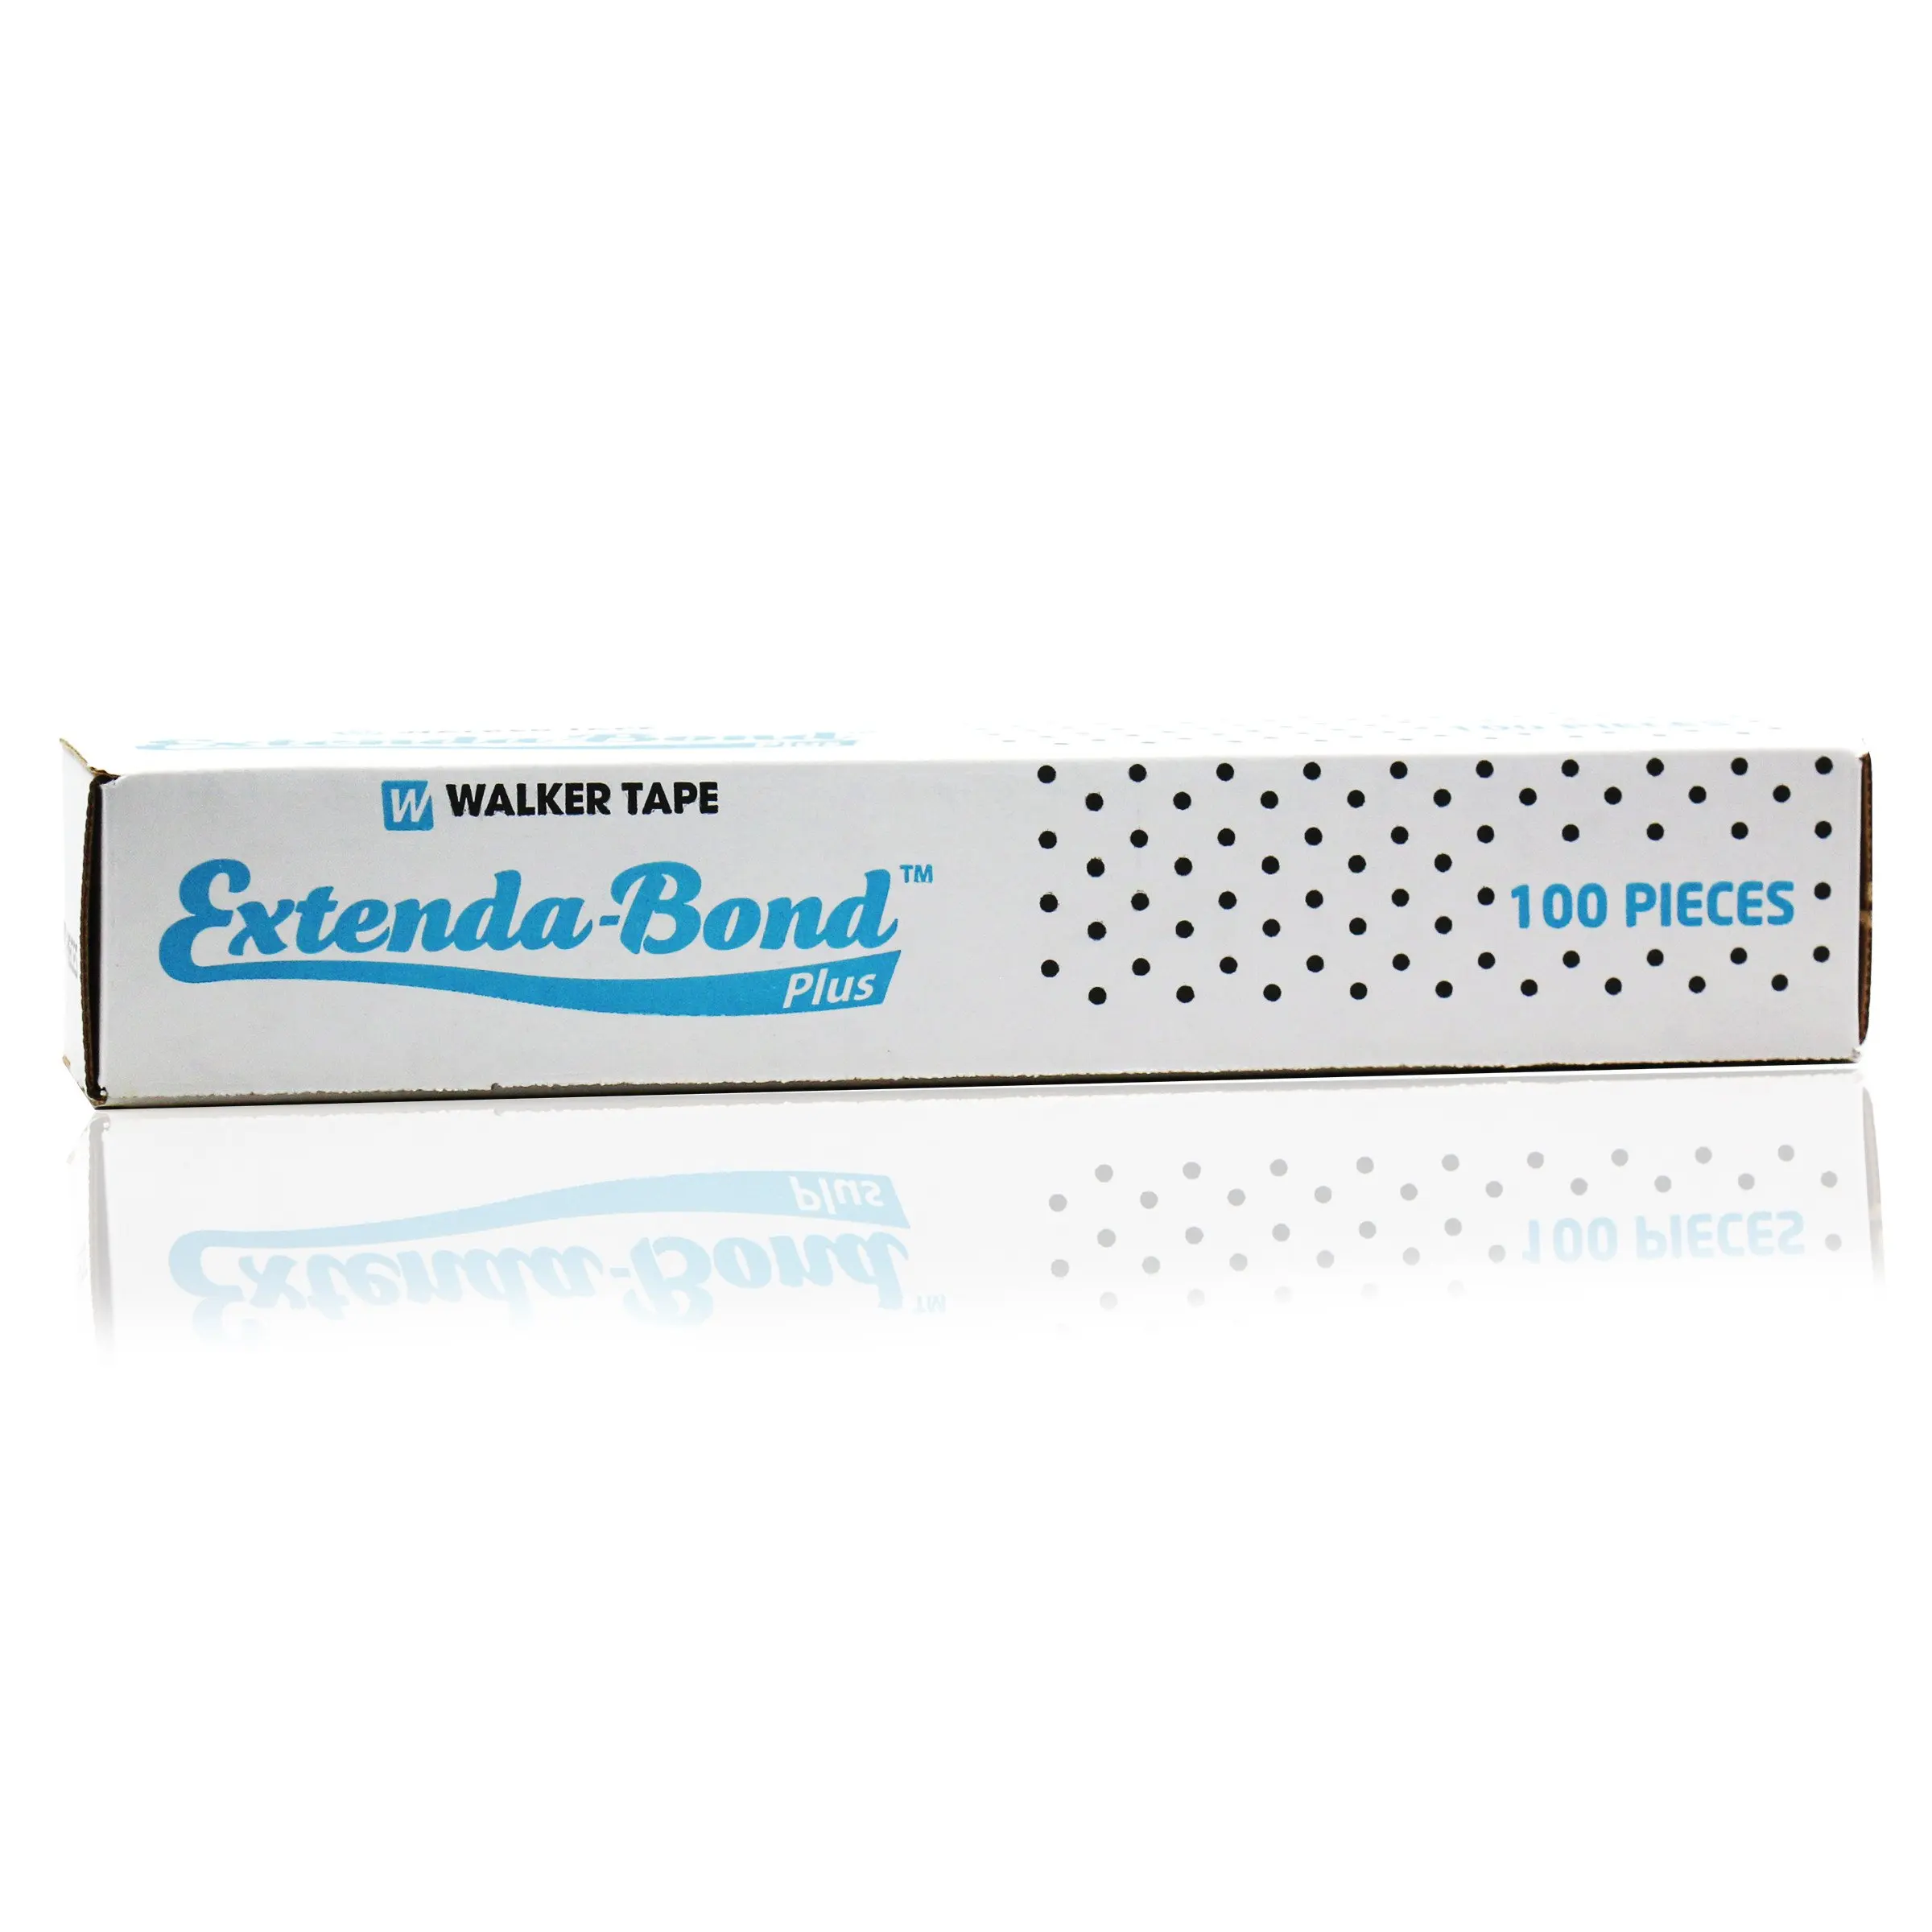 Hstonir Extenda-Bond Plus Strong and Flexible Walker Tape 100 Pieces Glue For Wigs Waterproof Toupee Tape Stick Hairpiece T011